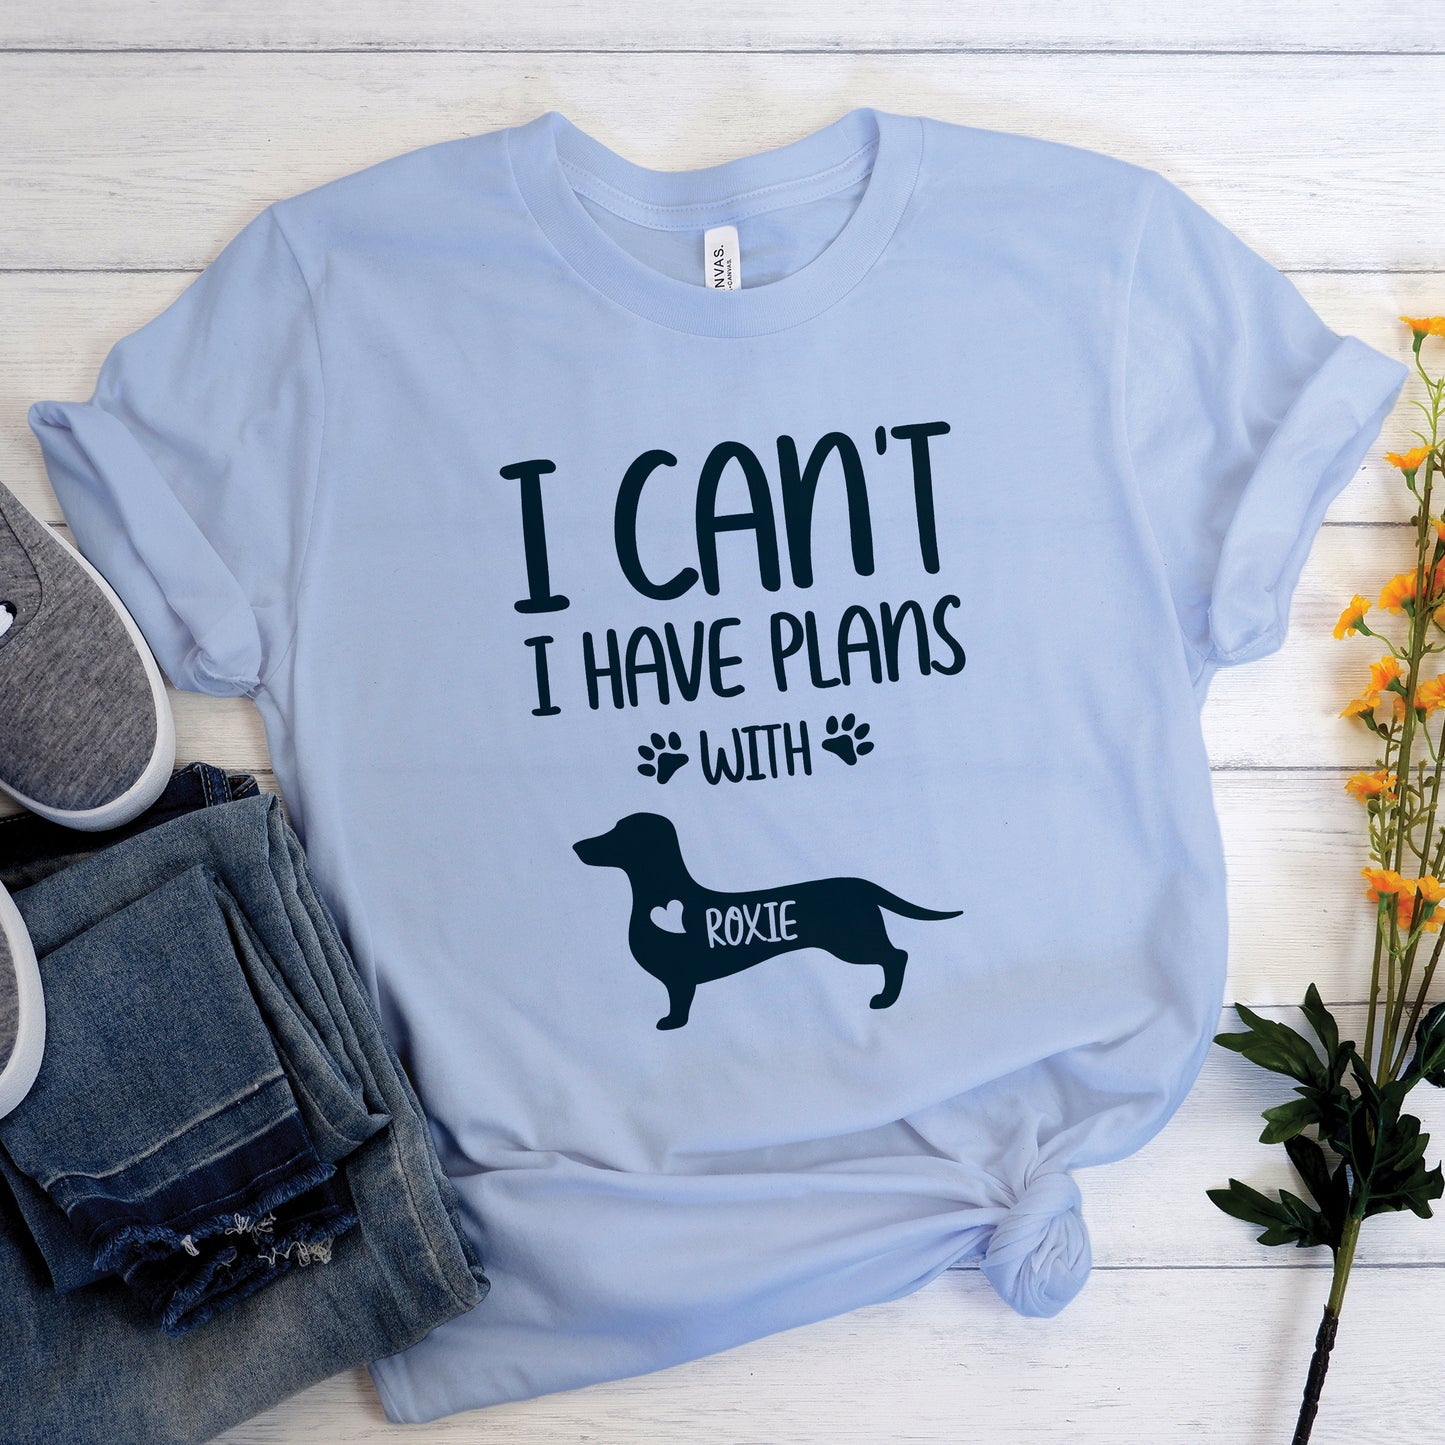 Custom T-shirt  with dachshund  Name